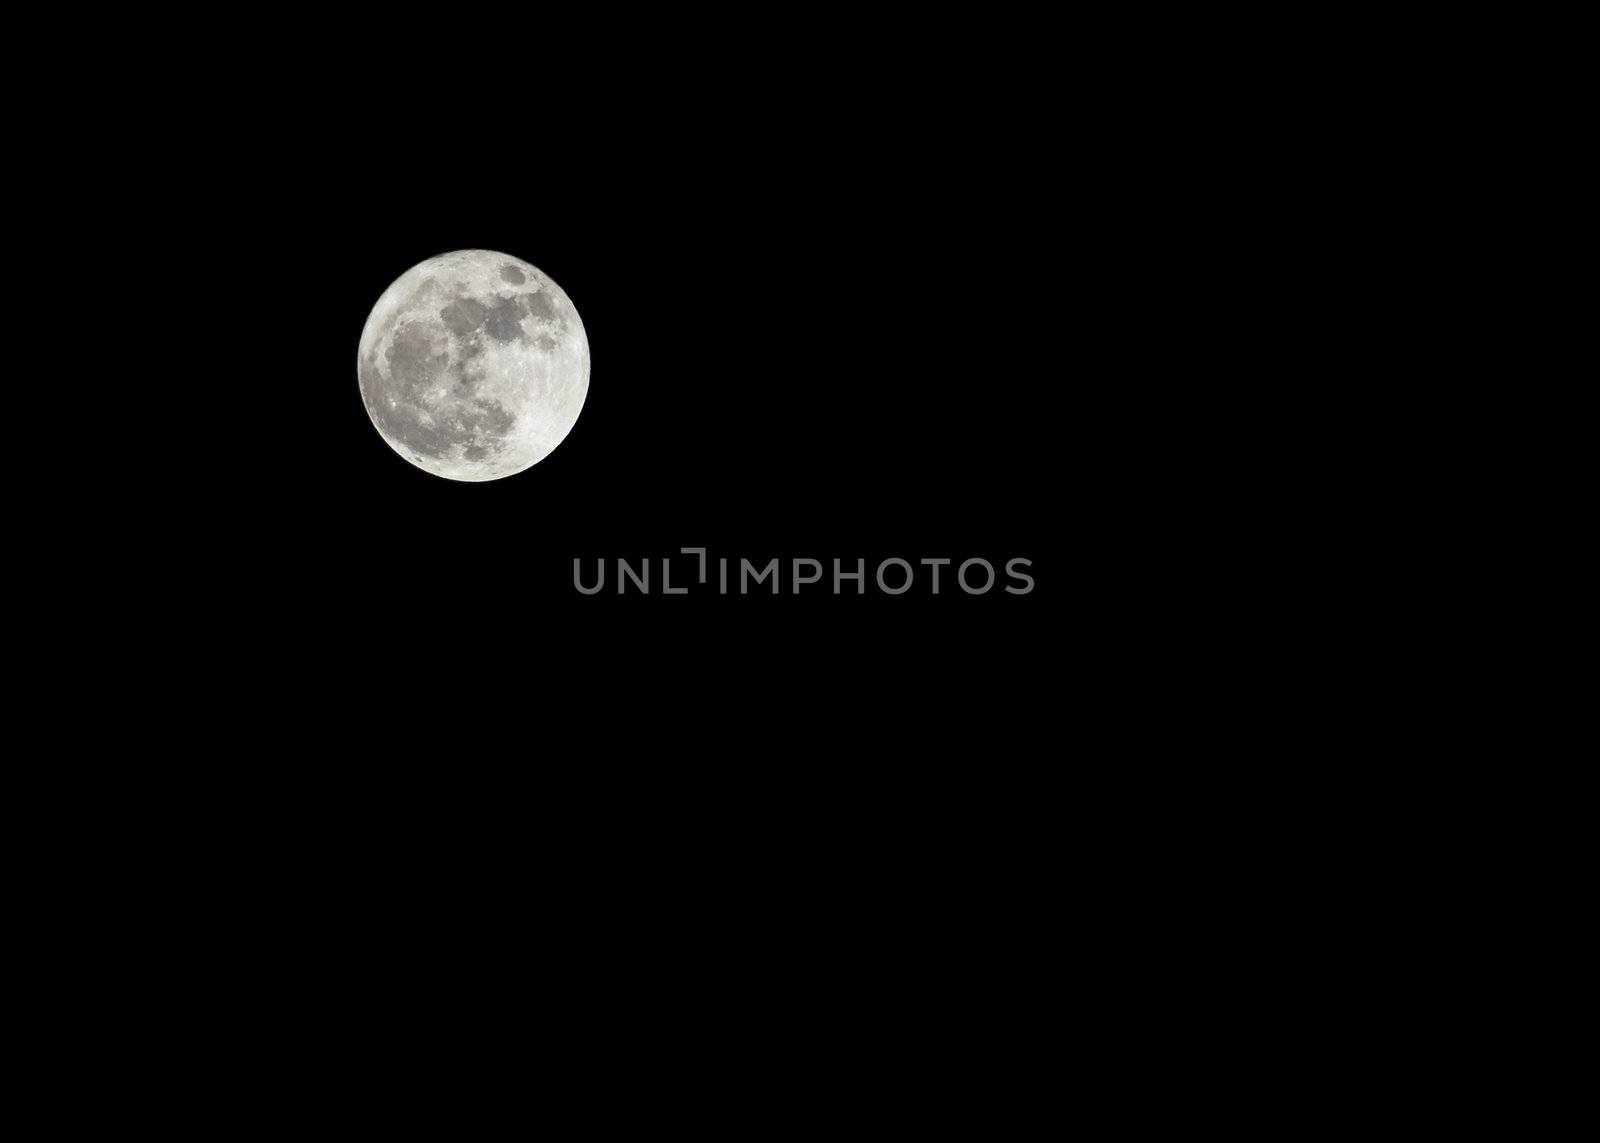 Full Moon by dutourdumonde